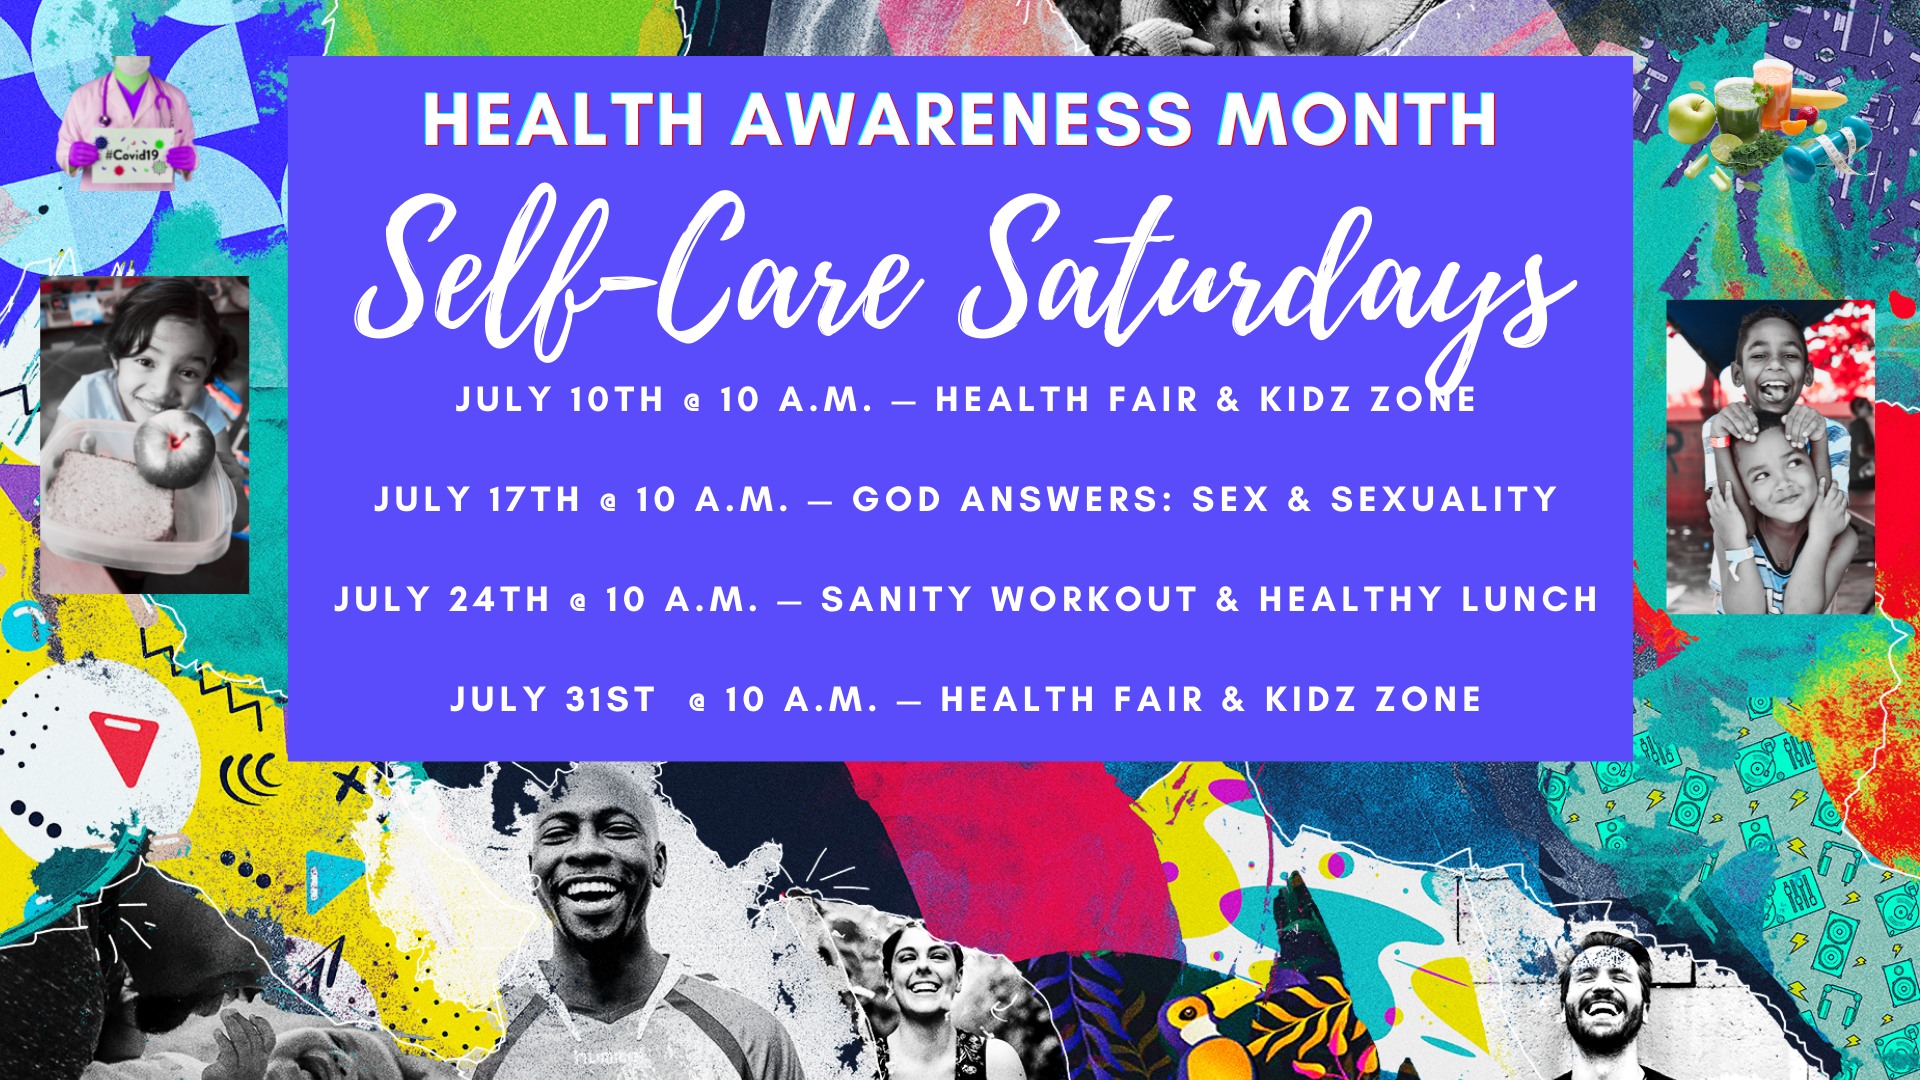 Heath Awareness Month – Self-Care Saturdays head image